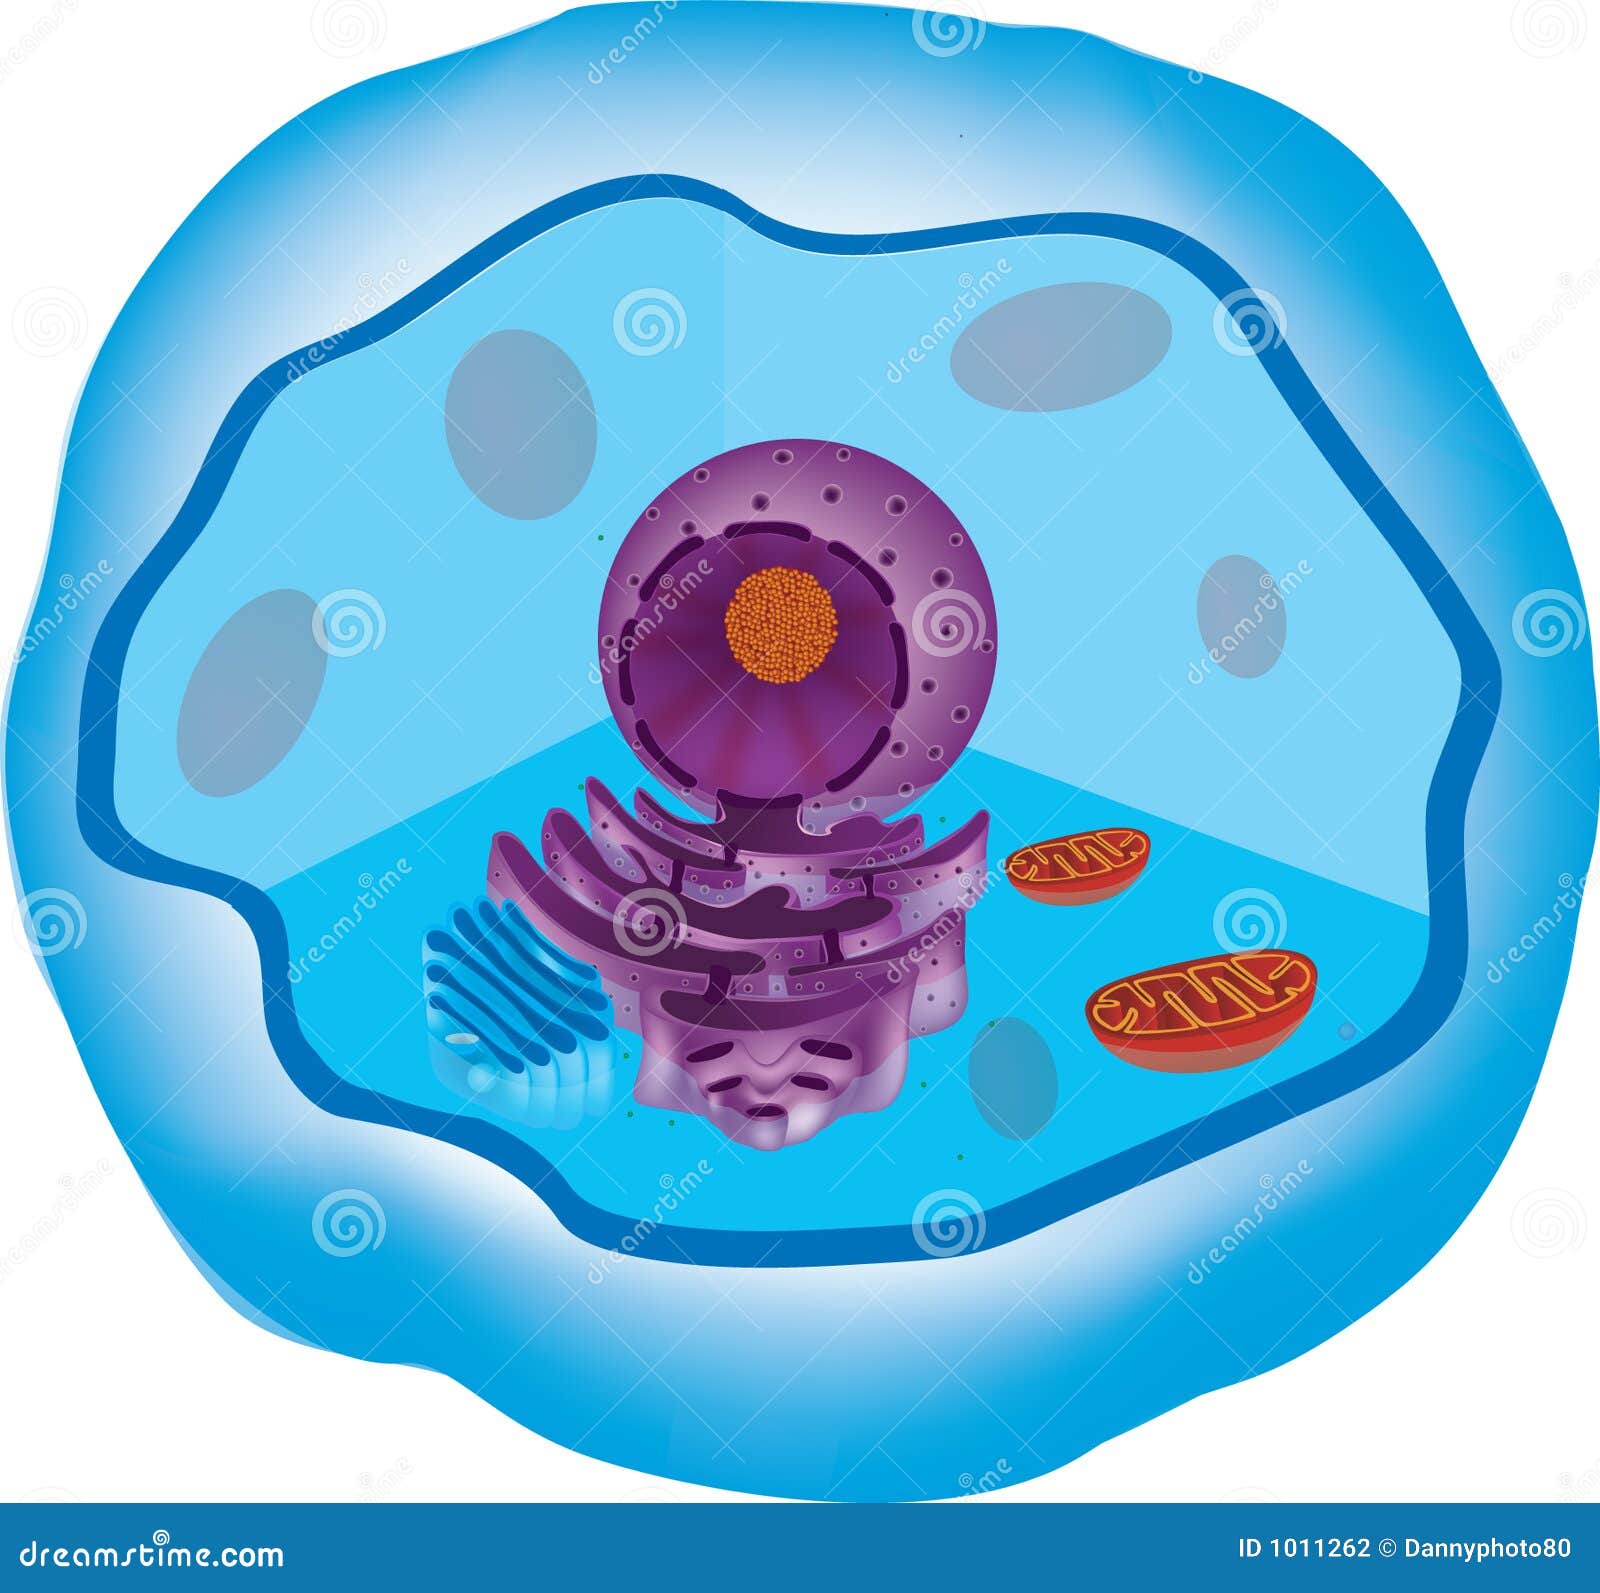 Animal cell stock illustration. Illustration of cell, cells - 1011262